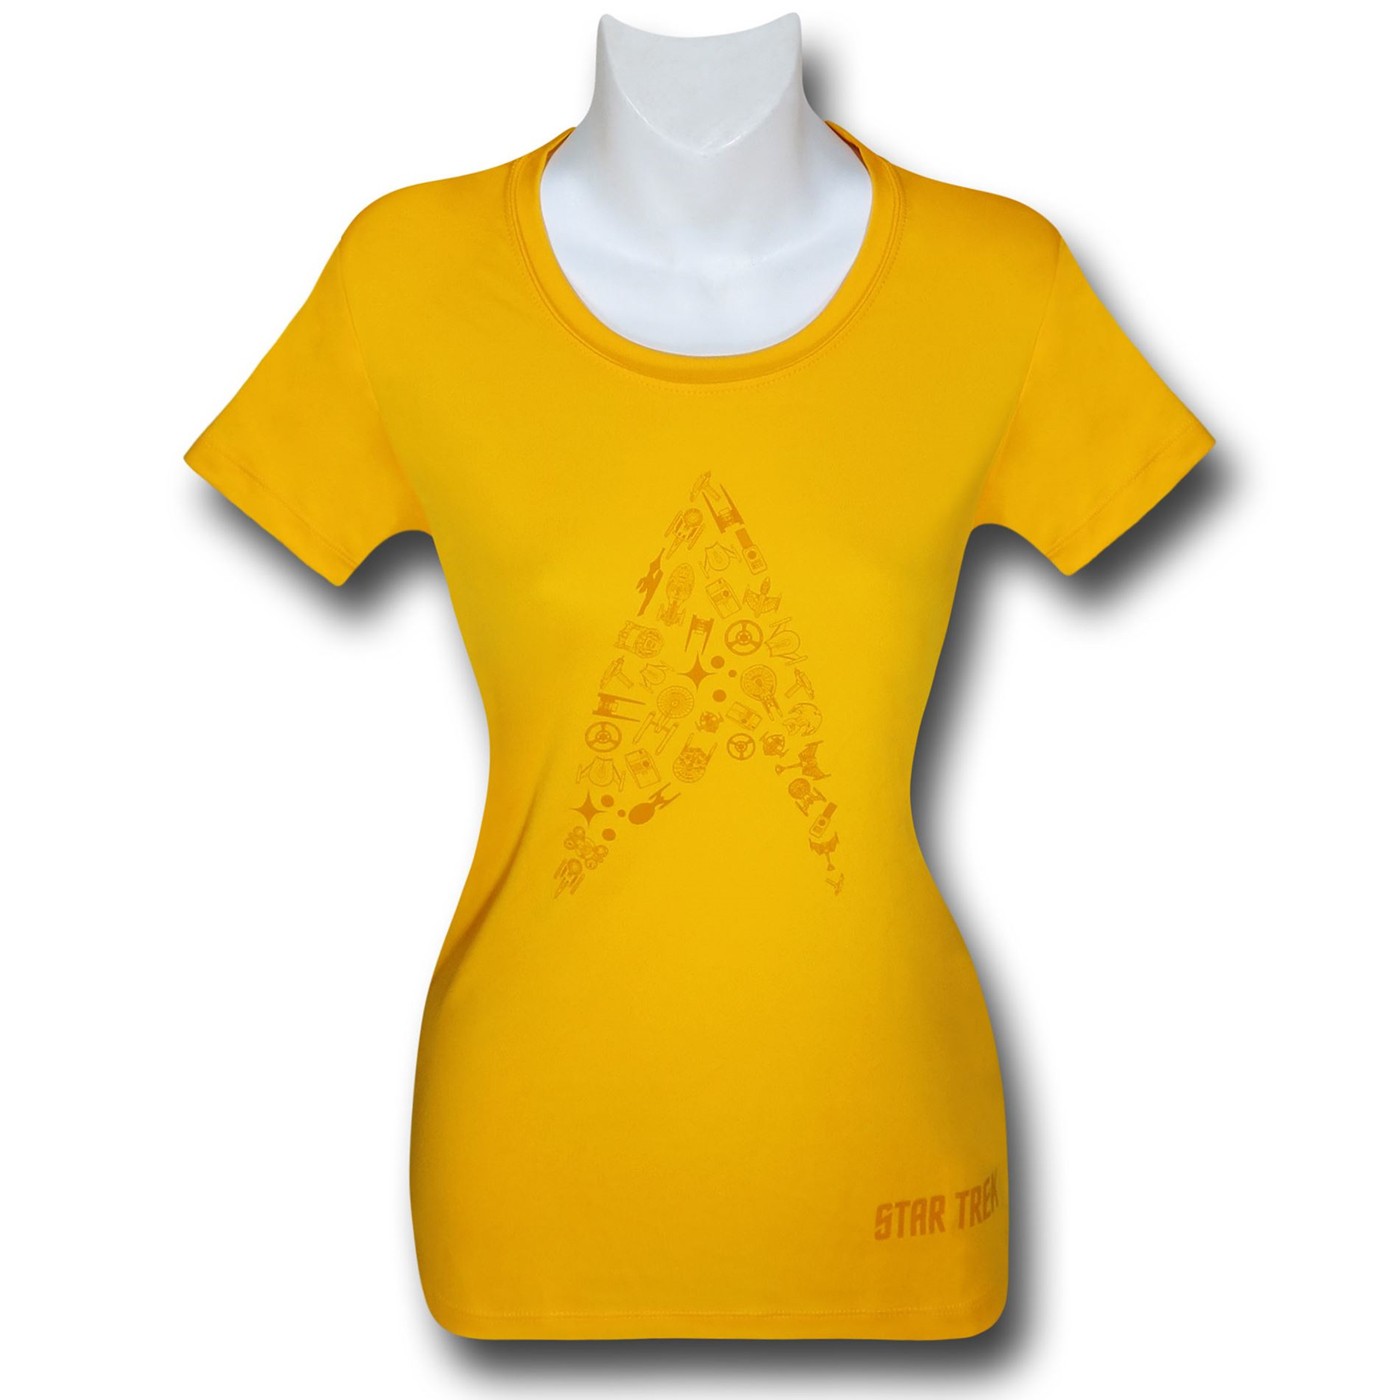 Star Trek Insignia Women's Gold Running Shirt